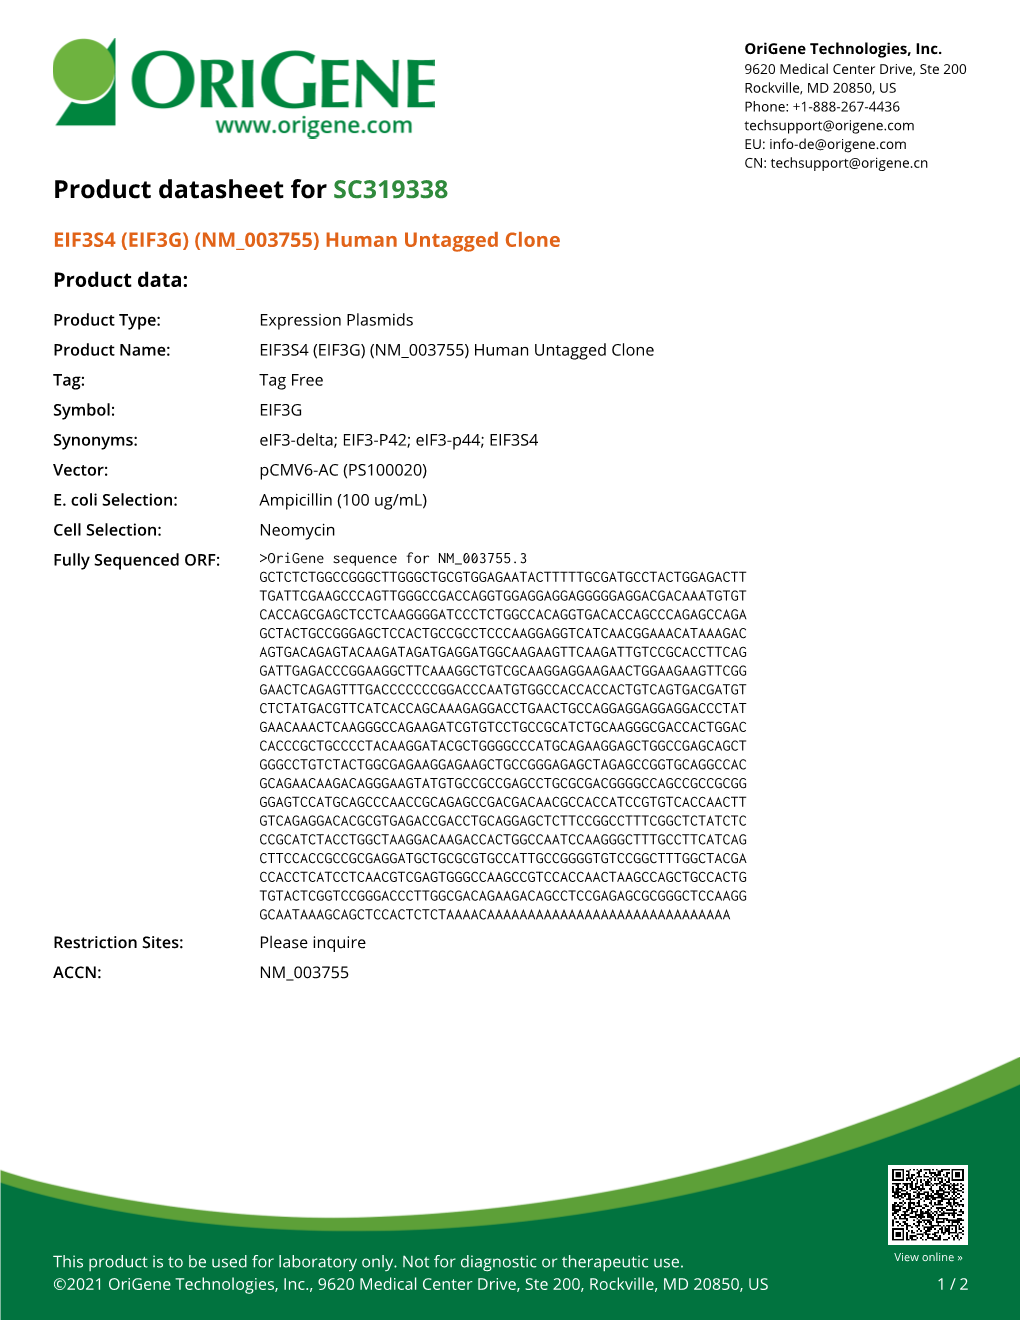 EIF3S4 (EIF3G) (NM 003755) Human Untagged Clone Product Data